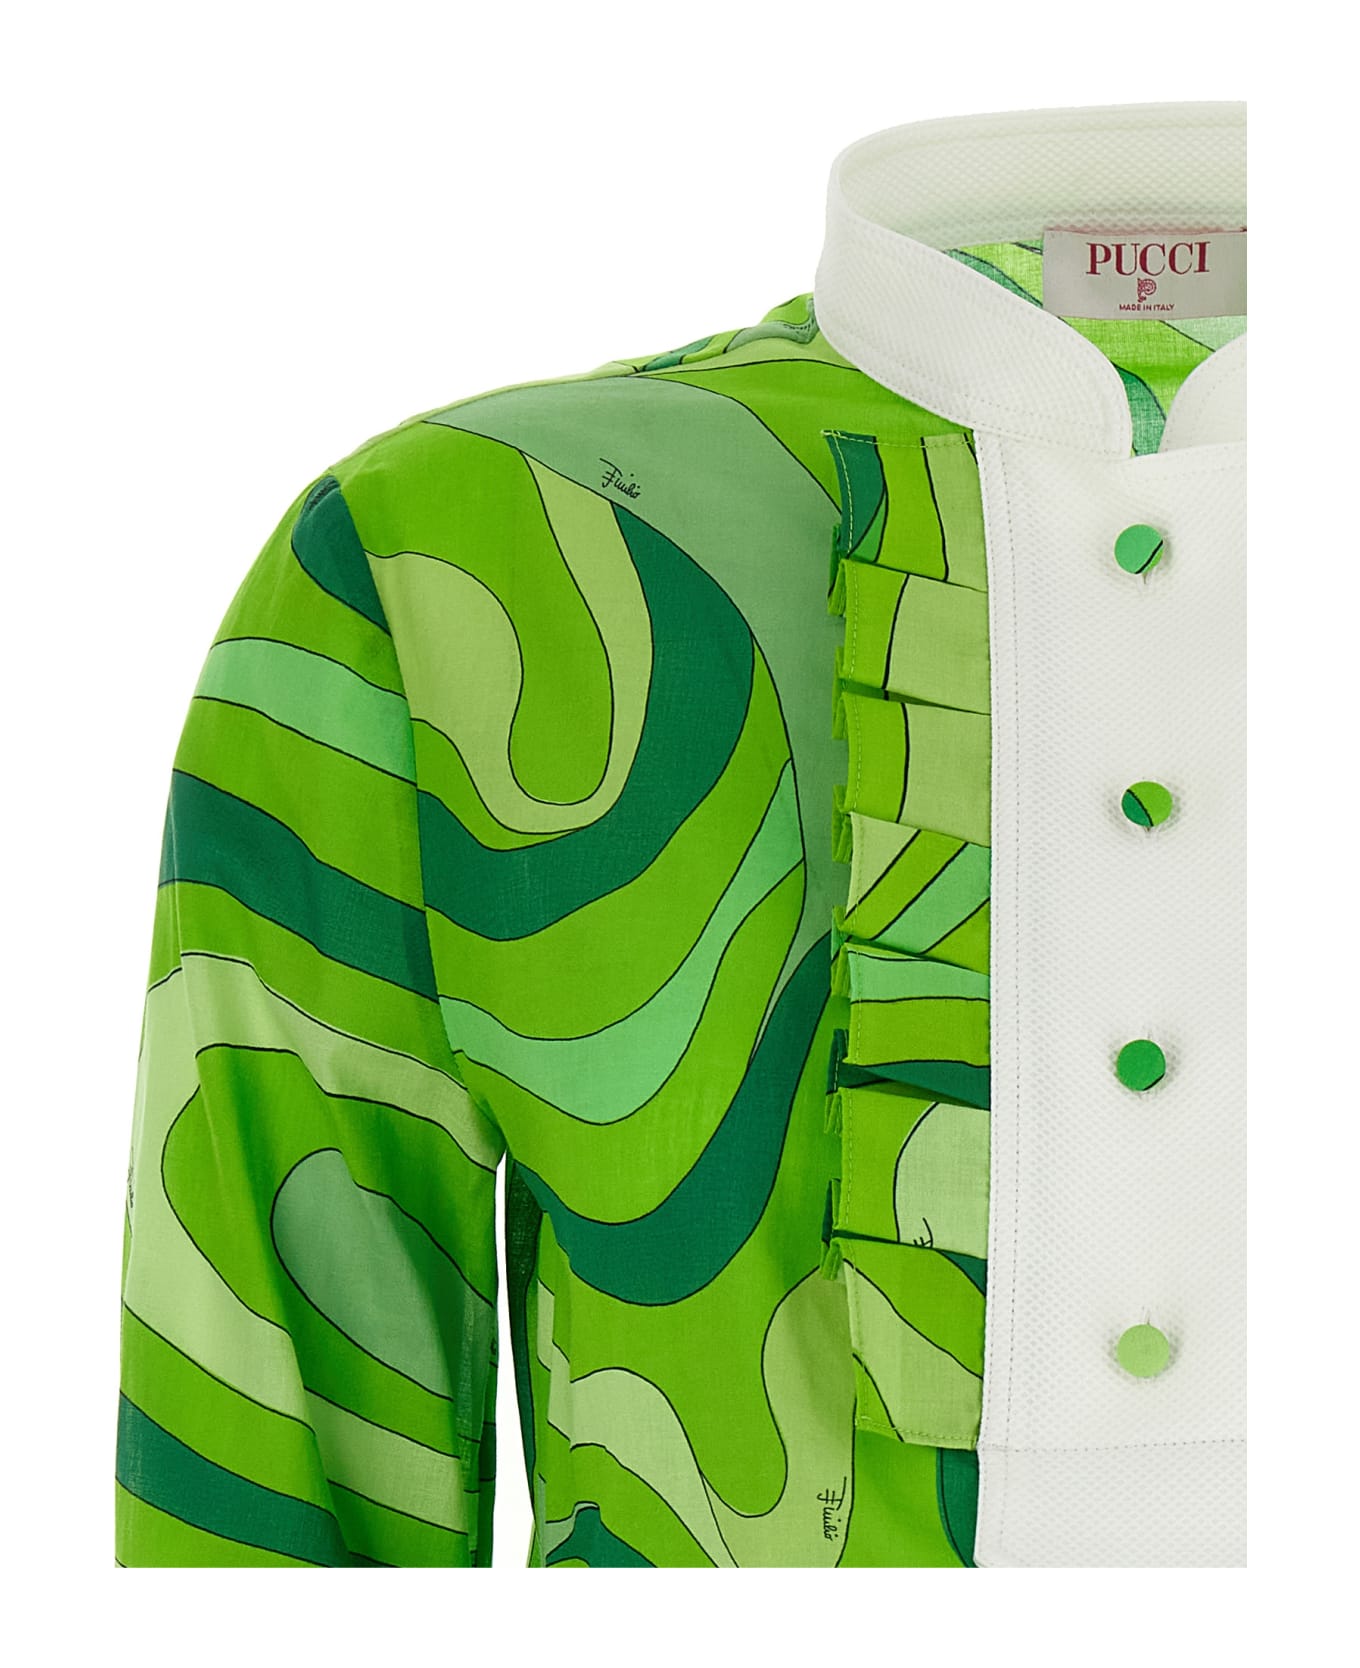 Pucci 'marmo' Shirt - Green